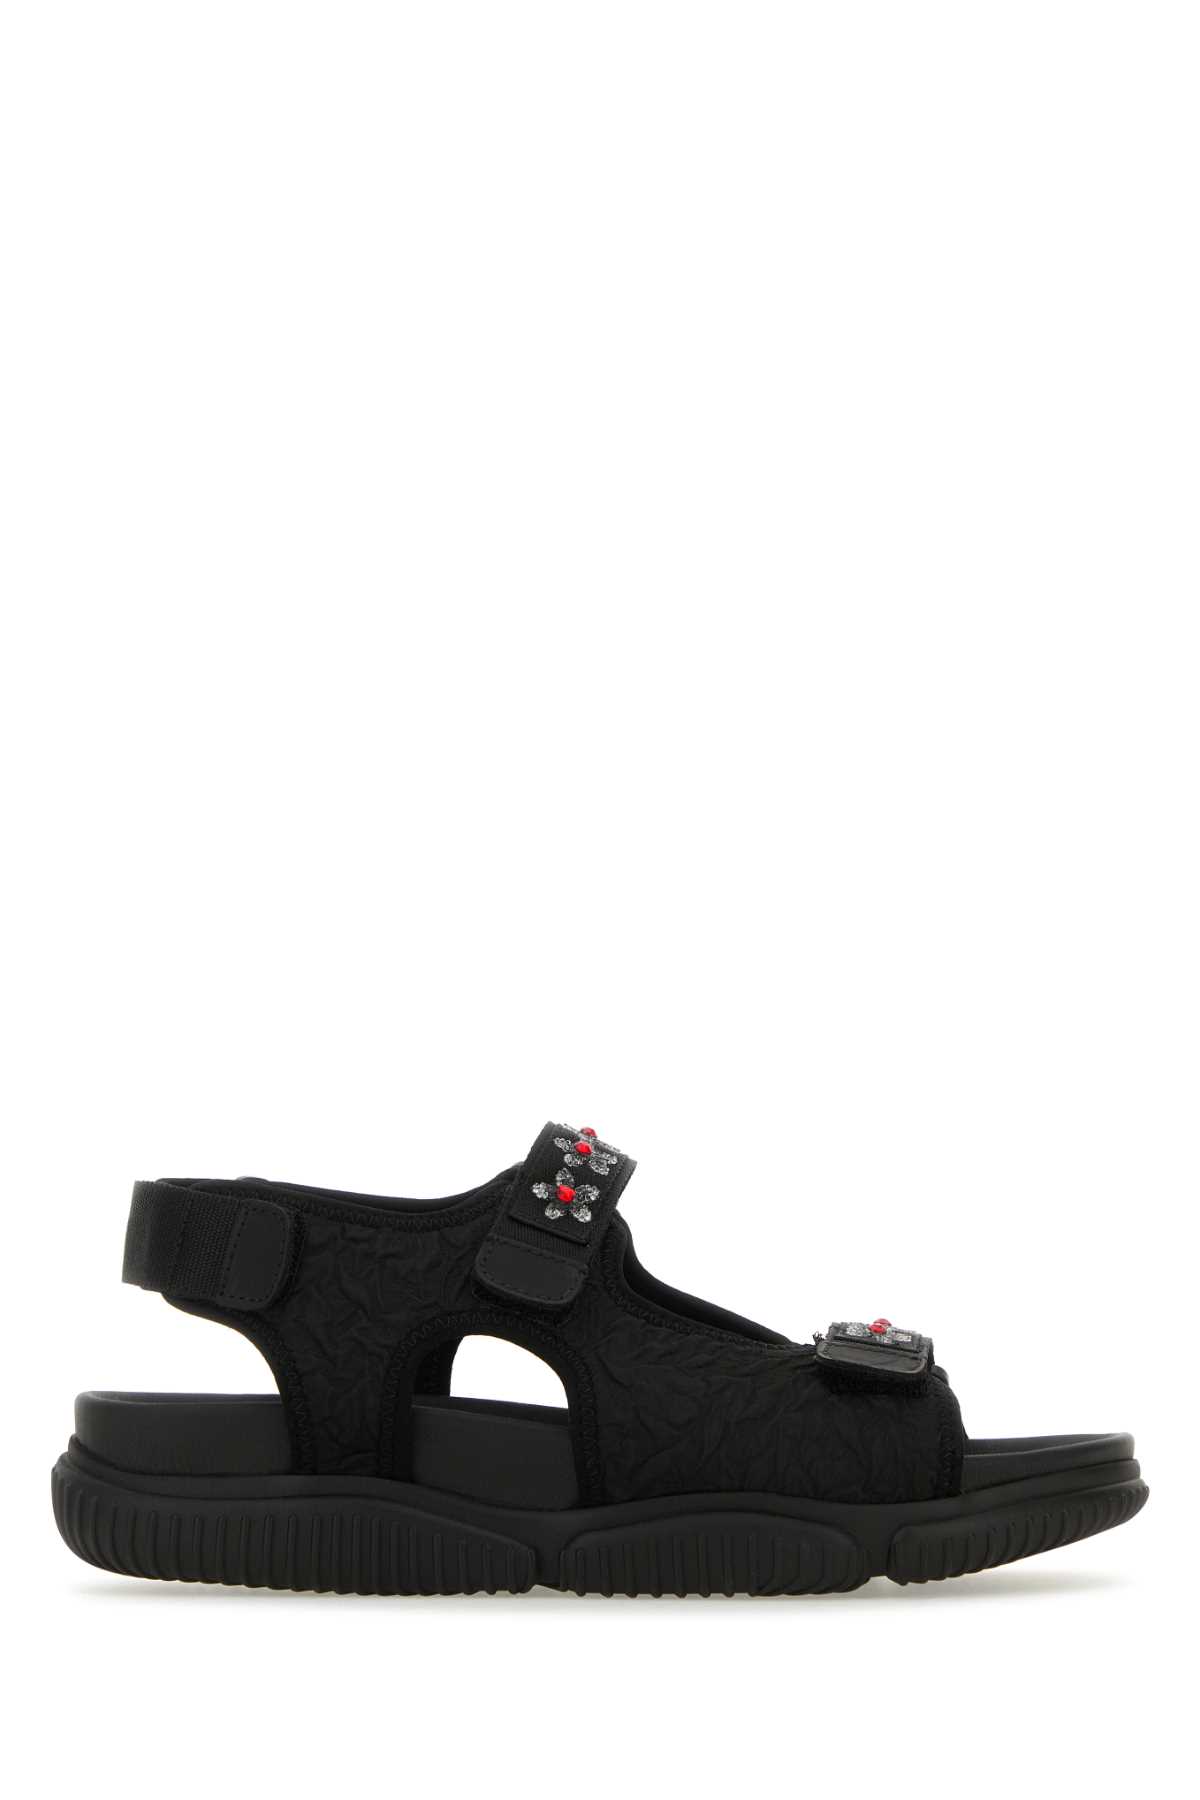 Cecilie Bahnsen Black Fabric Sandals In Blackred